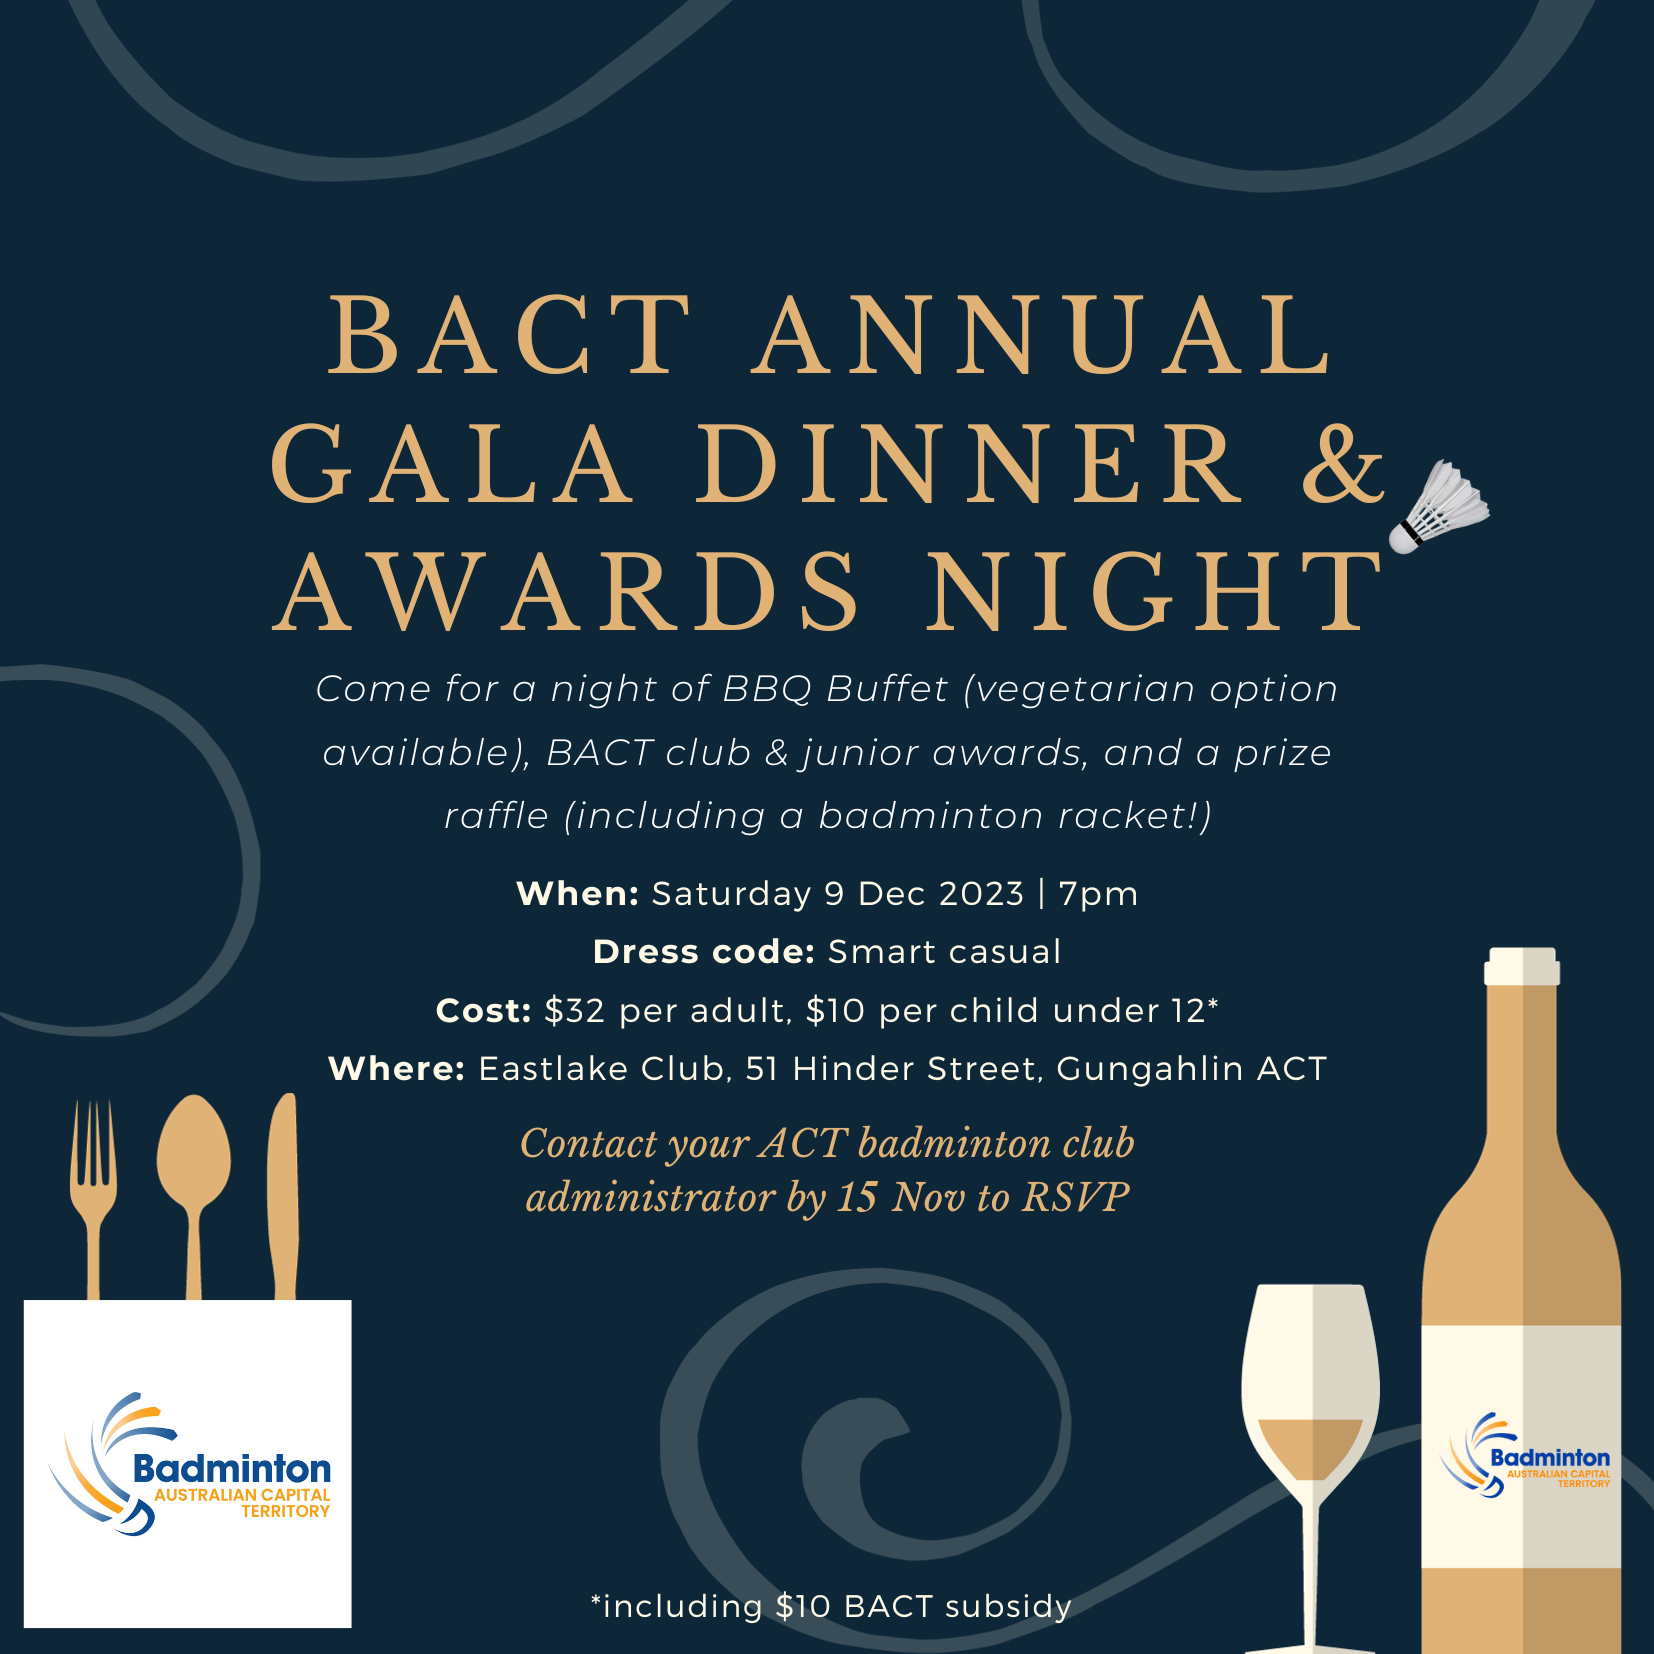 BACT Annual Gala Dinner & Awards Night 2023